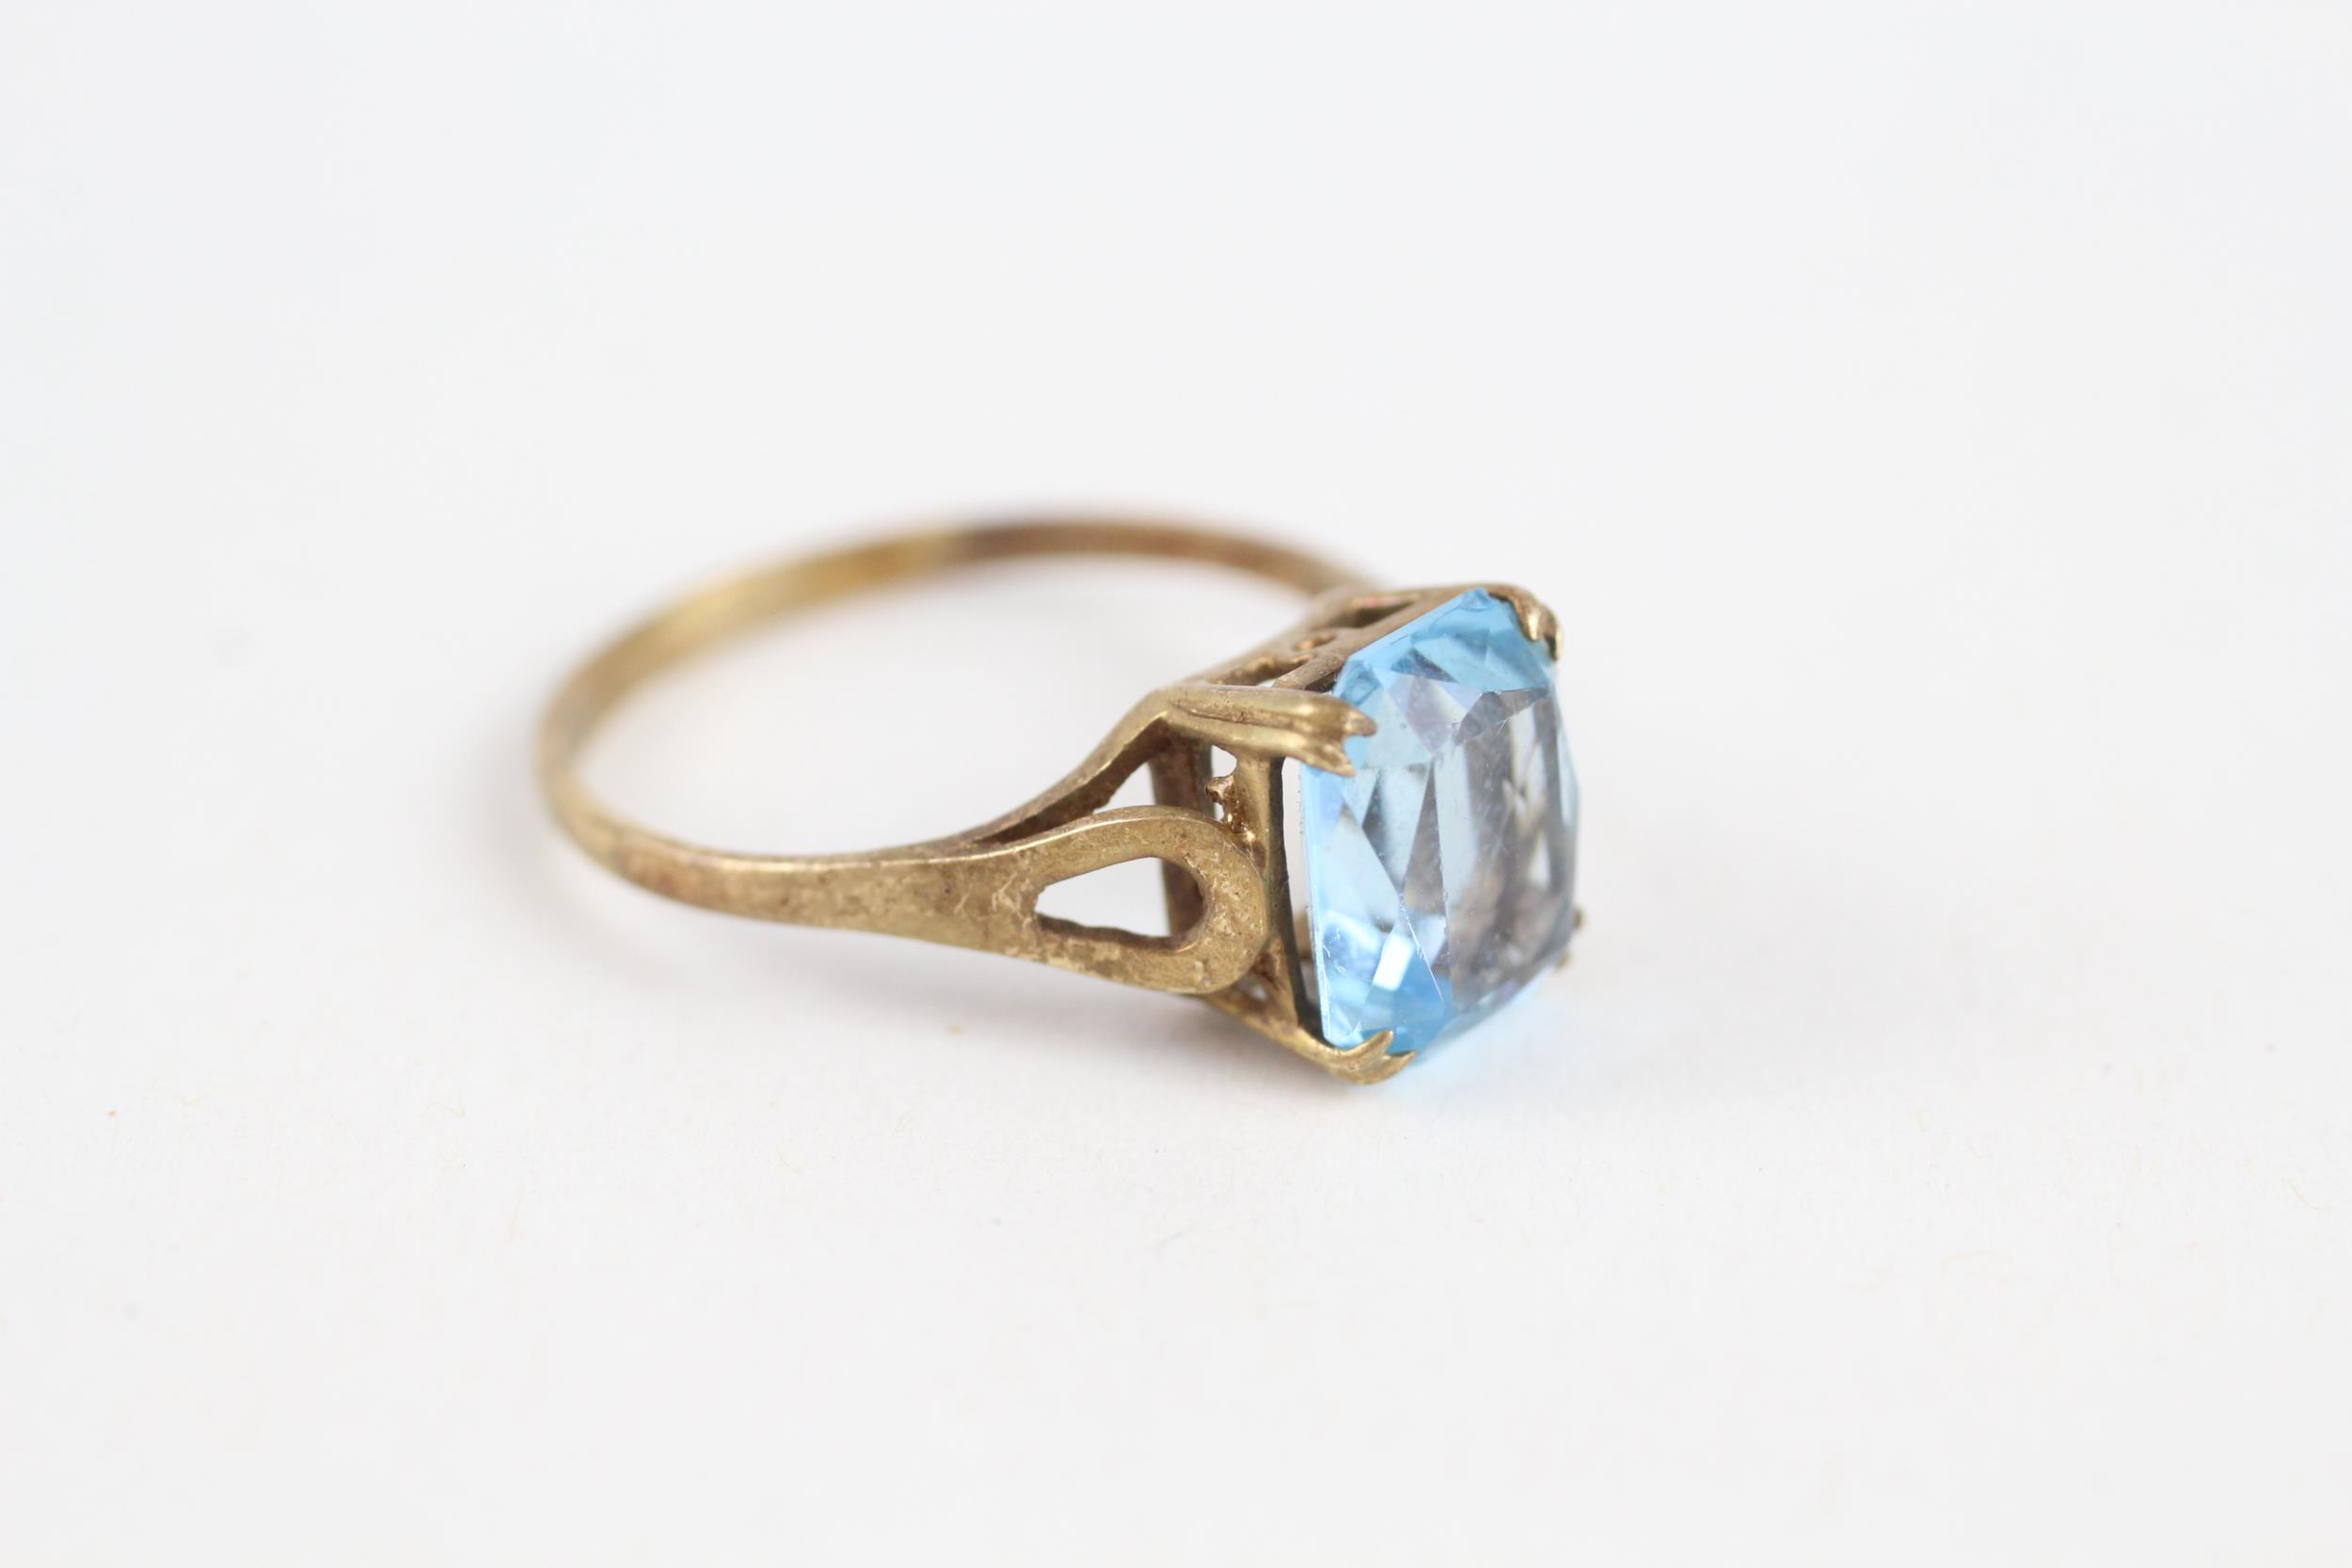 9ct gold vintage blue paste dress ring Size P - 2.2 g - Image 2 of 4